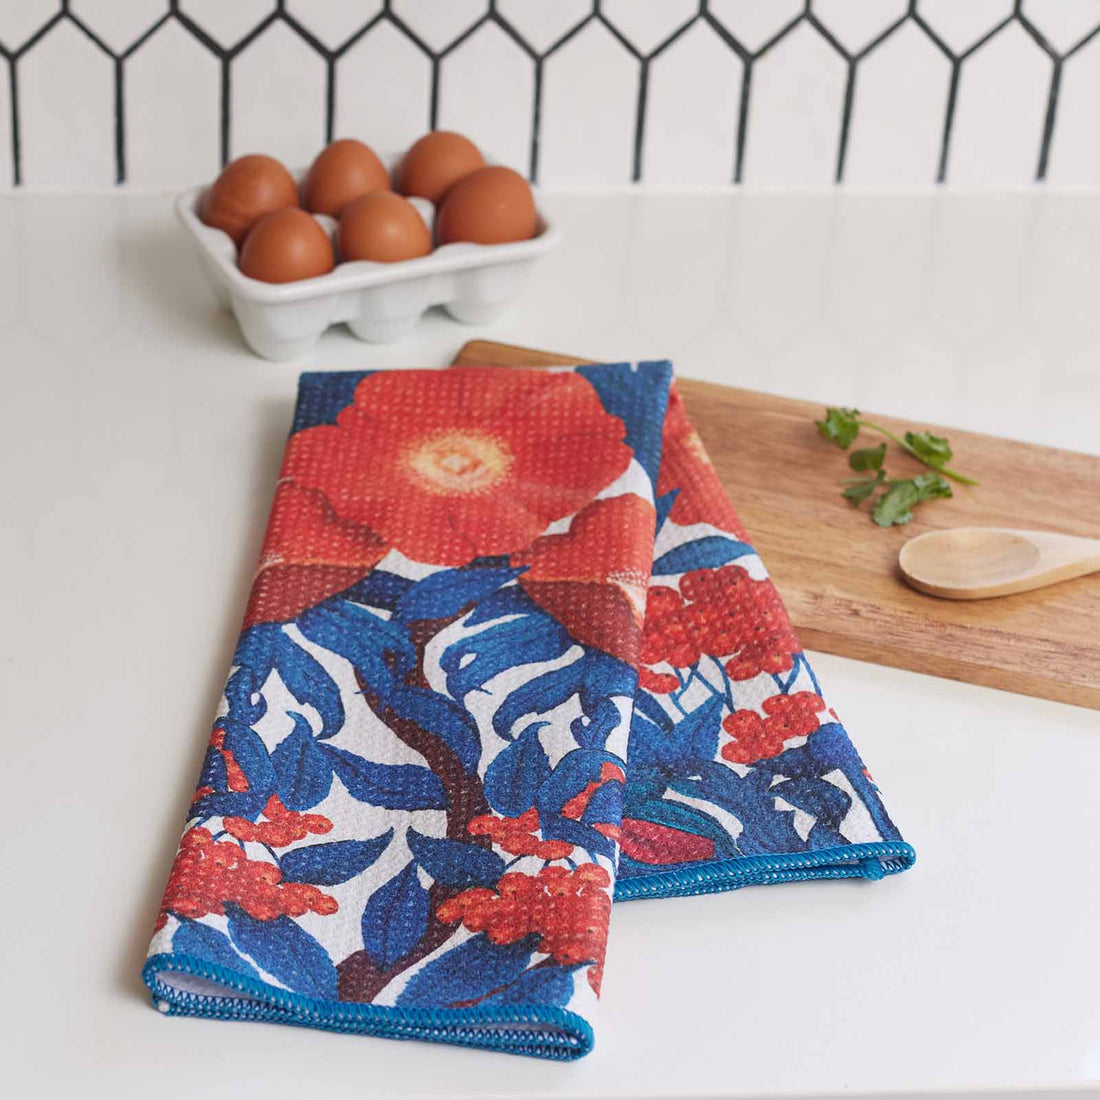 rockflowerpaper Hydrangea and Stripes Kitchen Towels - Set of 3